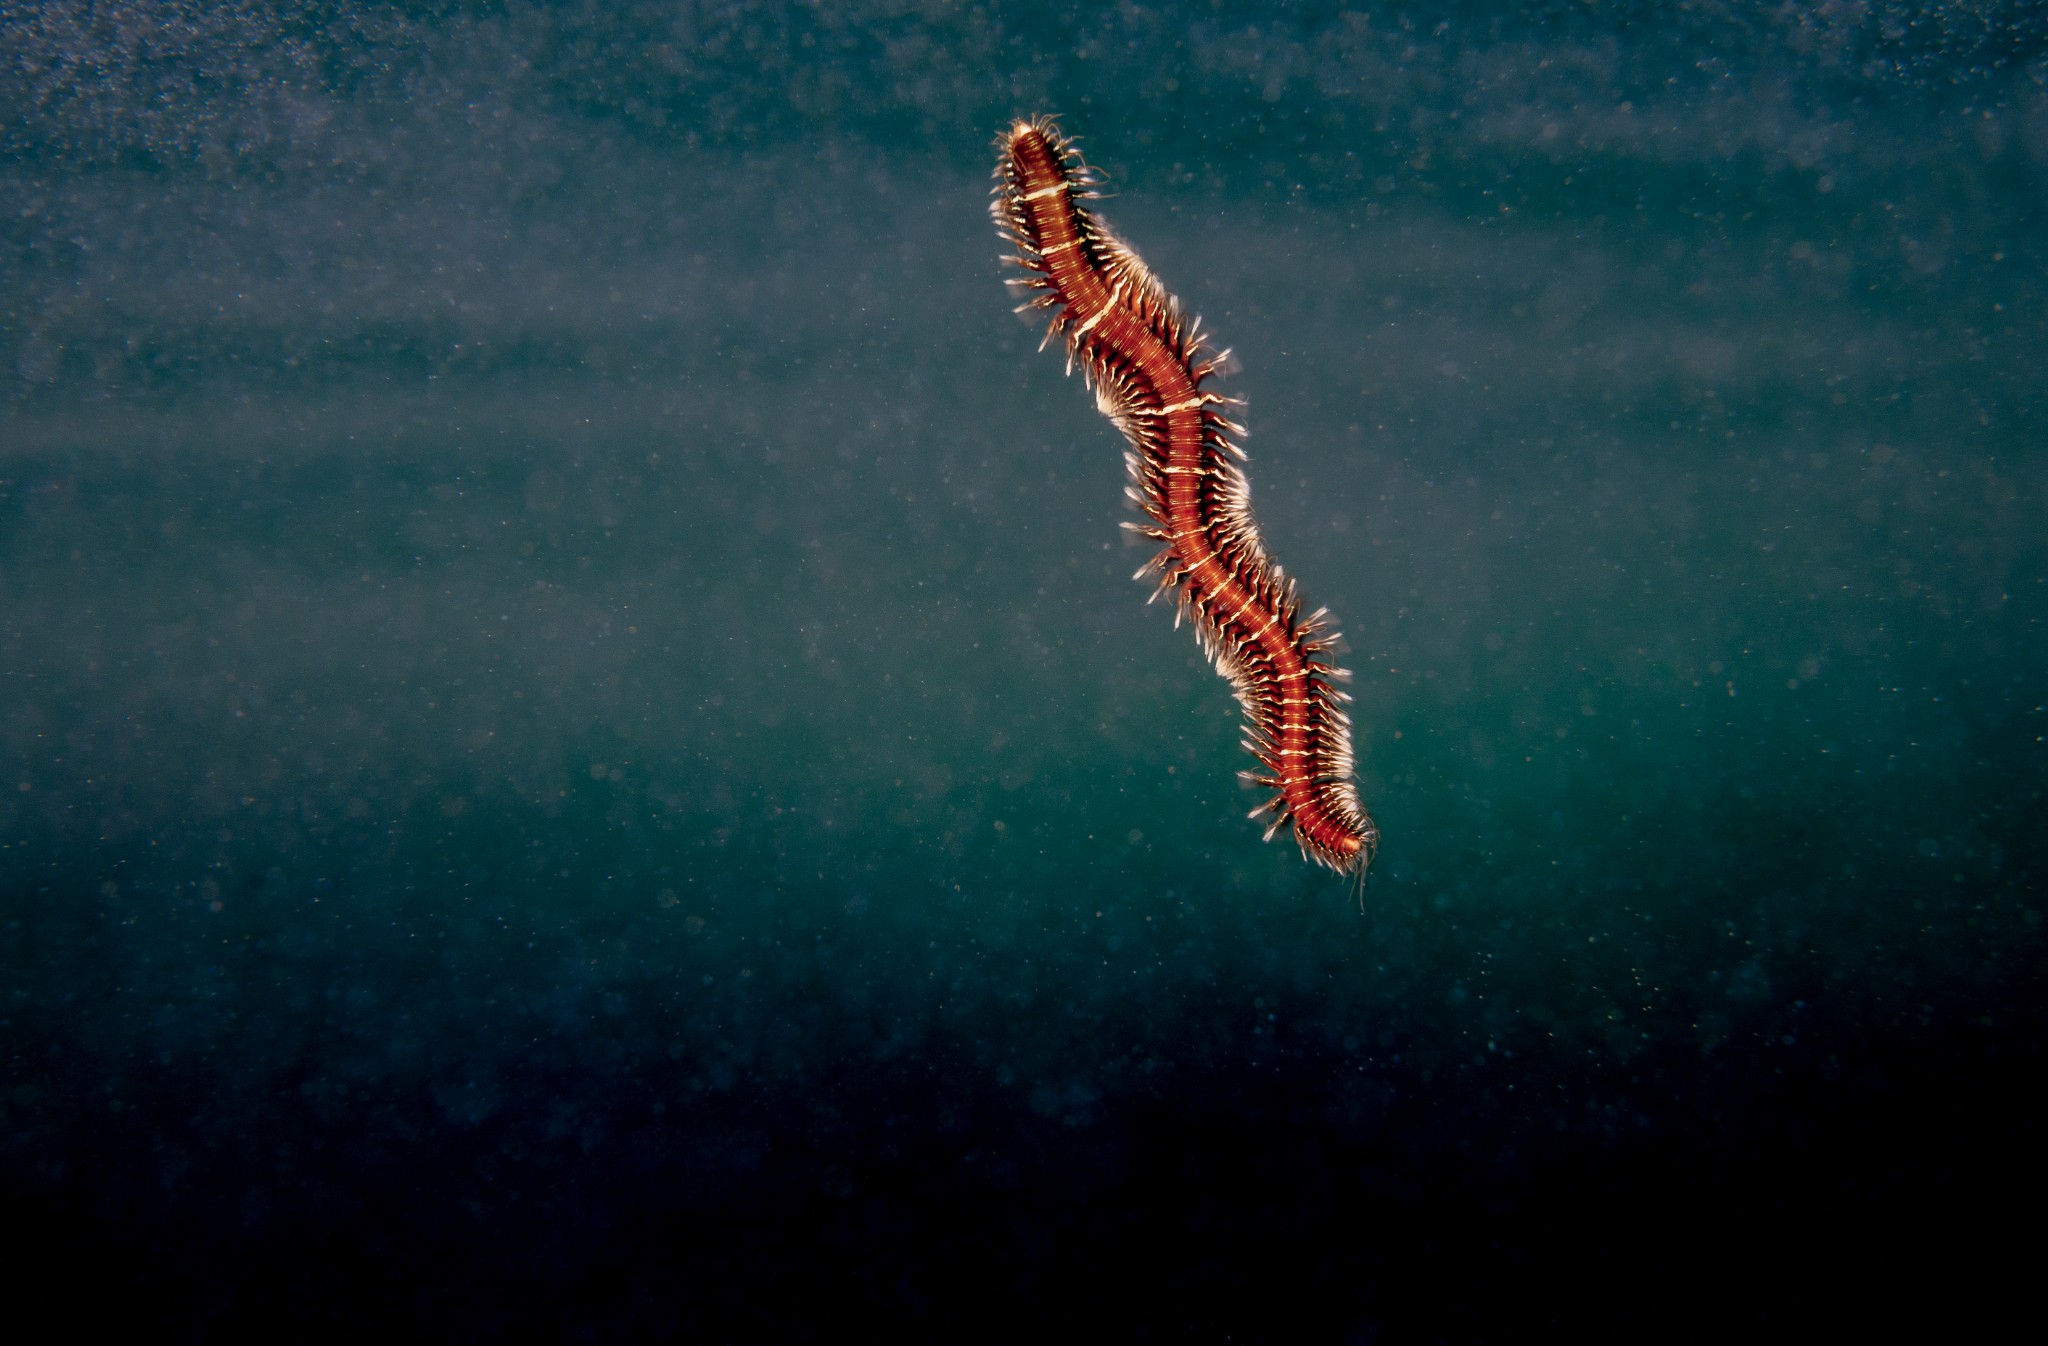 Polychete worm - image by Raymond Besant